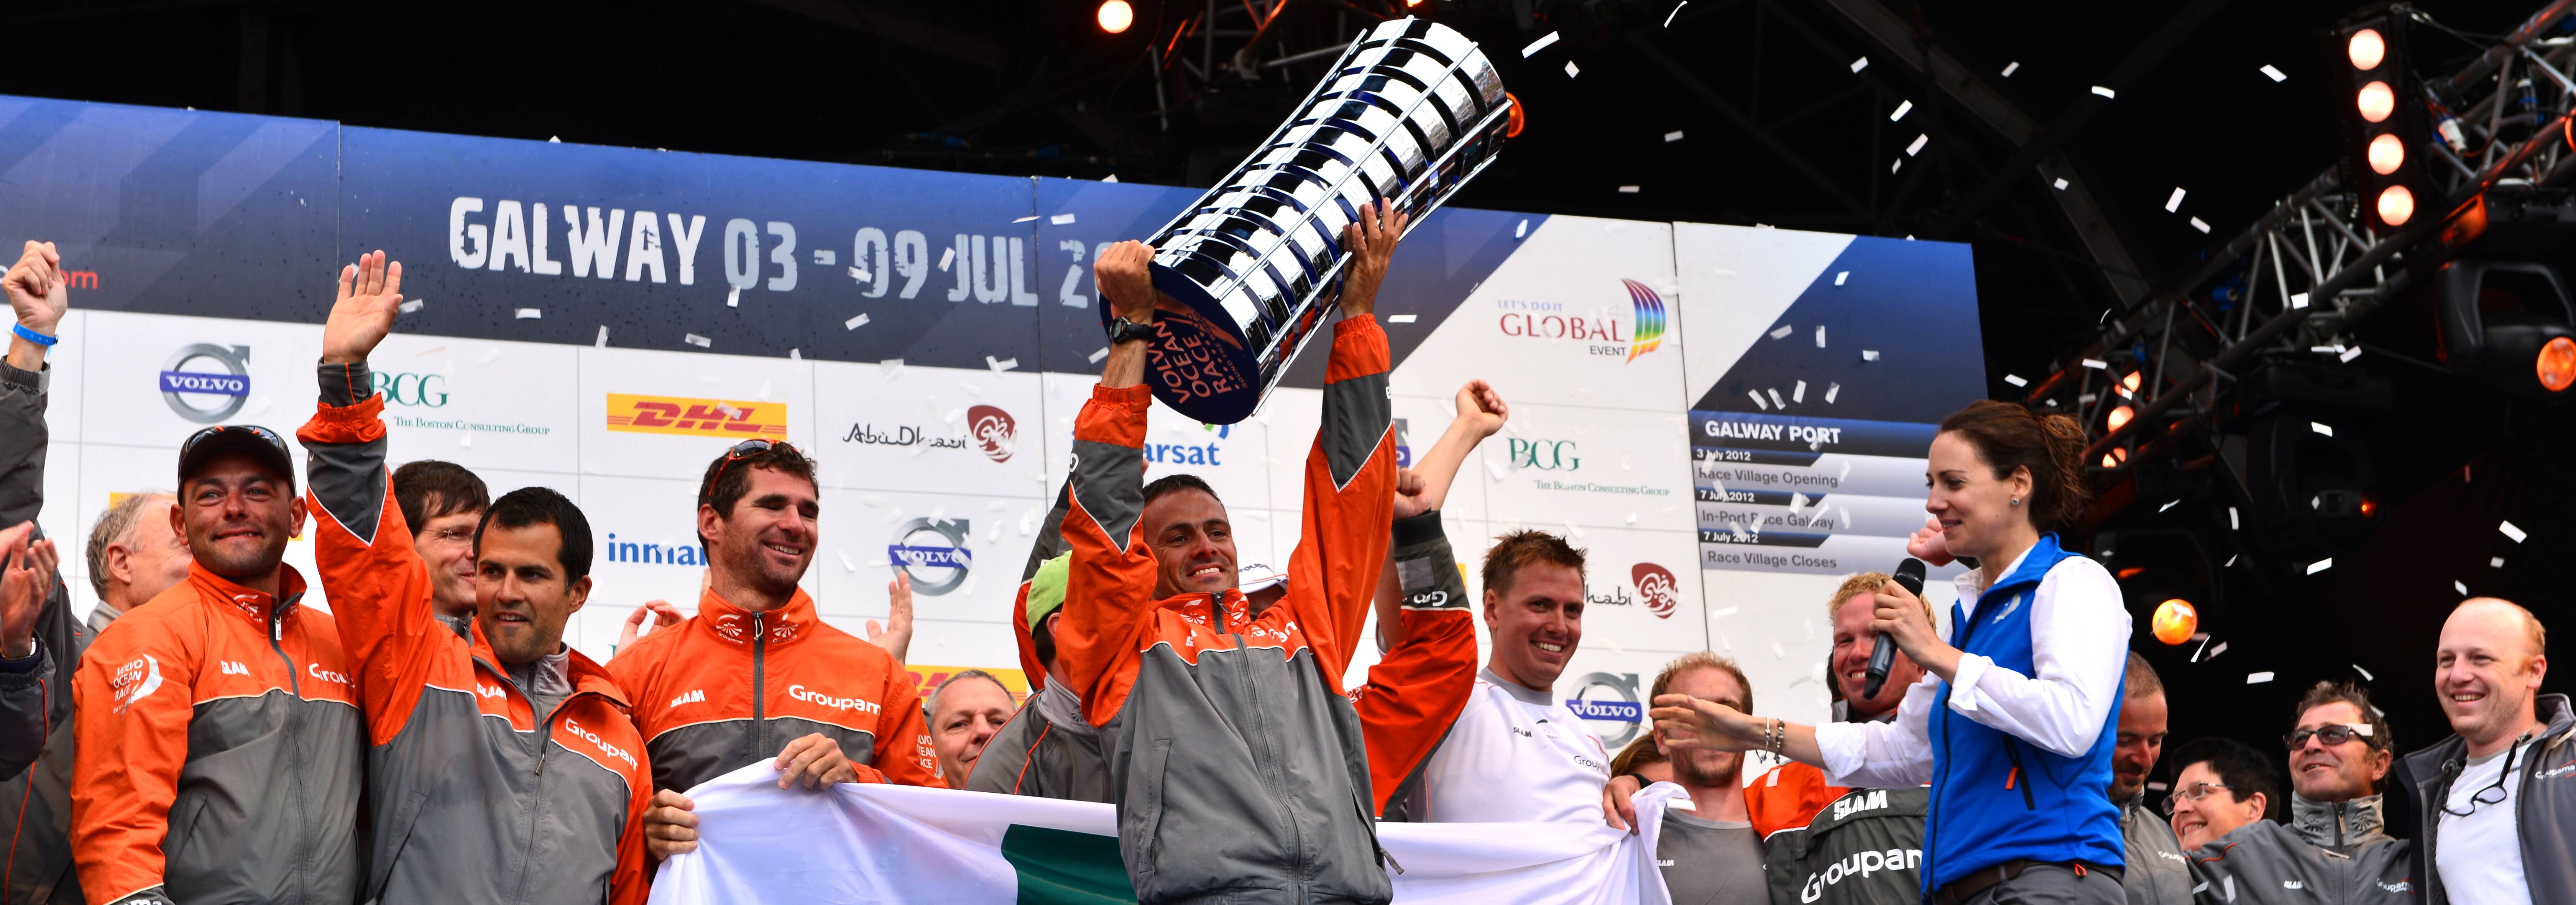 Grouopama vince la Volvo Ocean Race 2011/2012